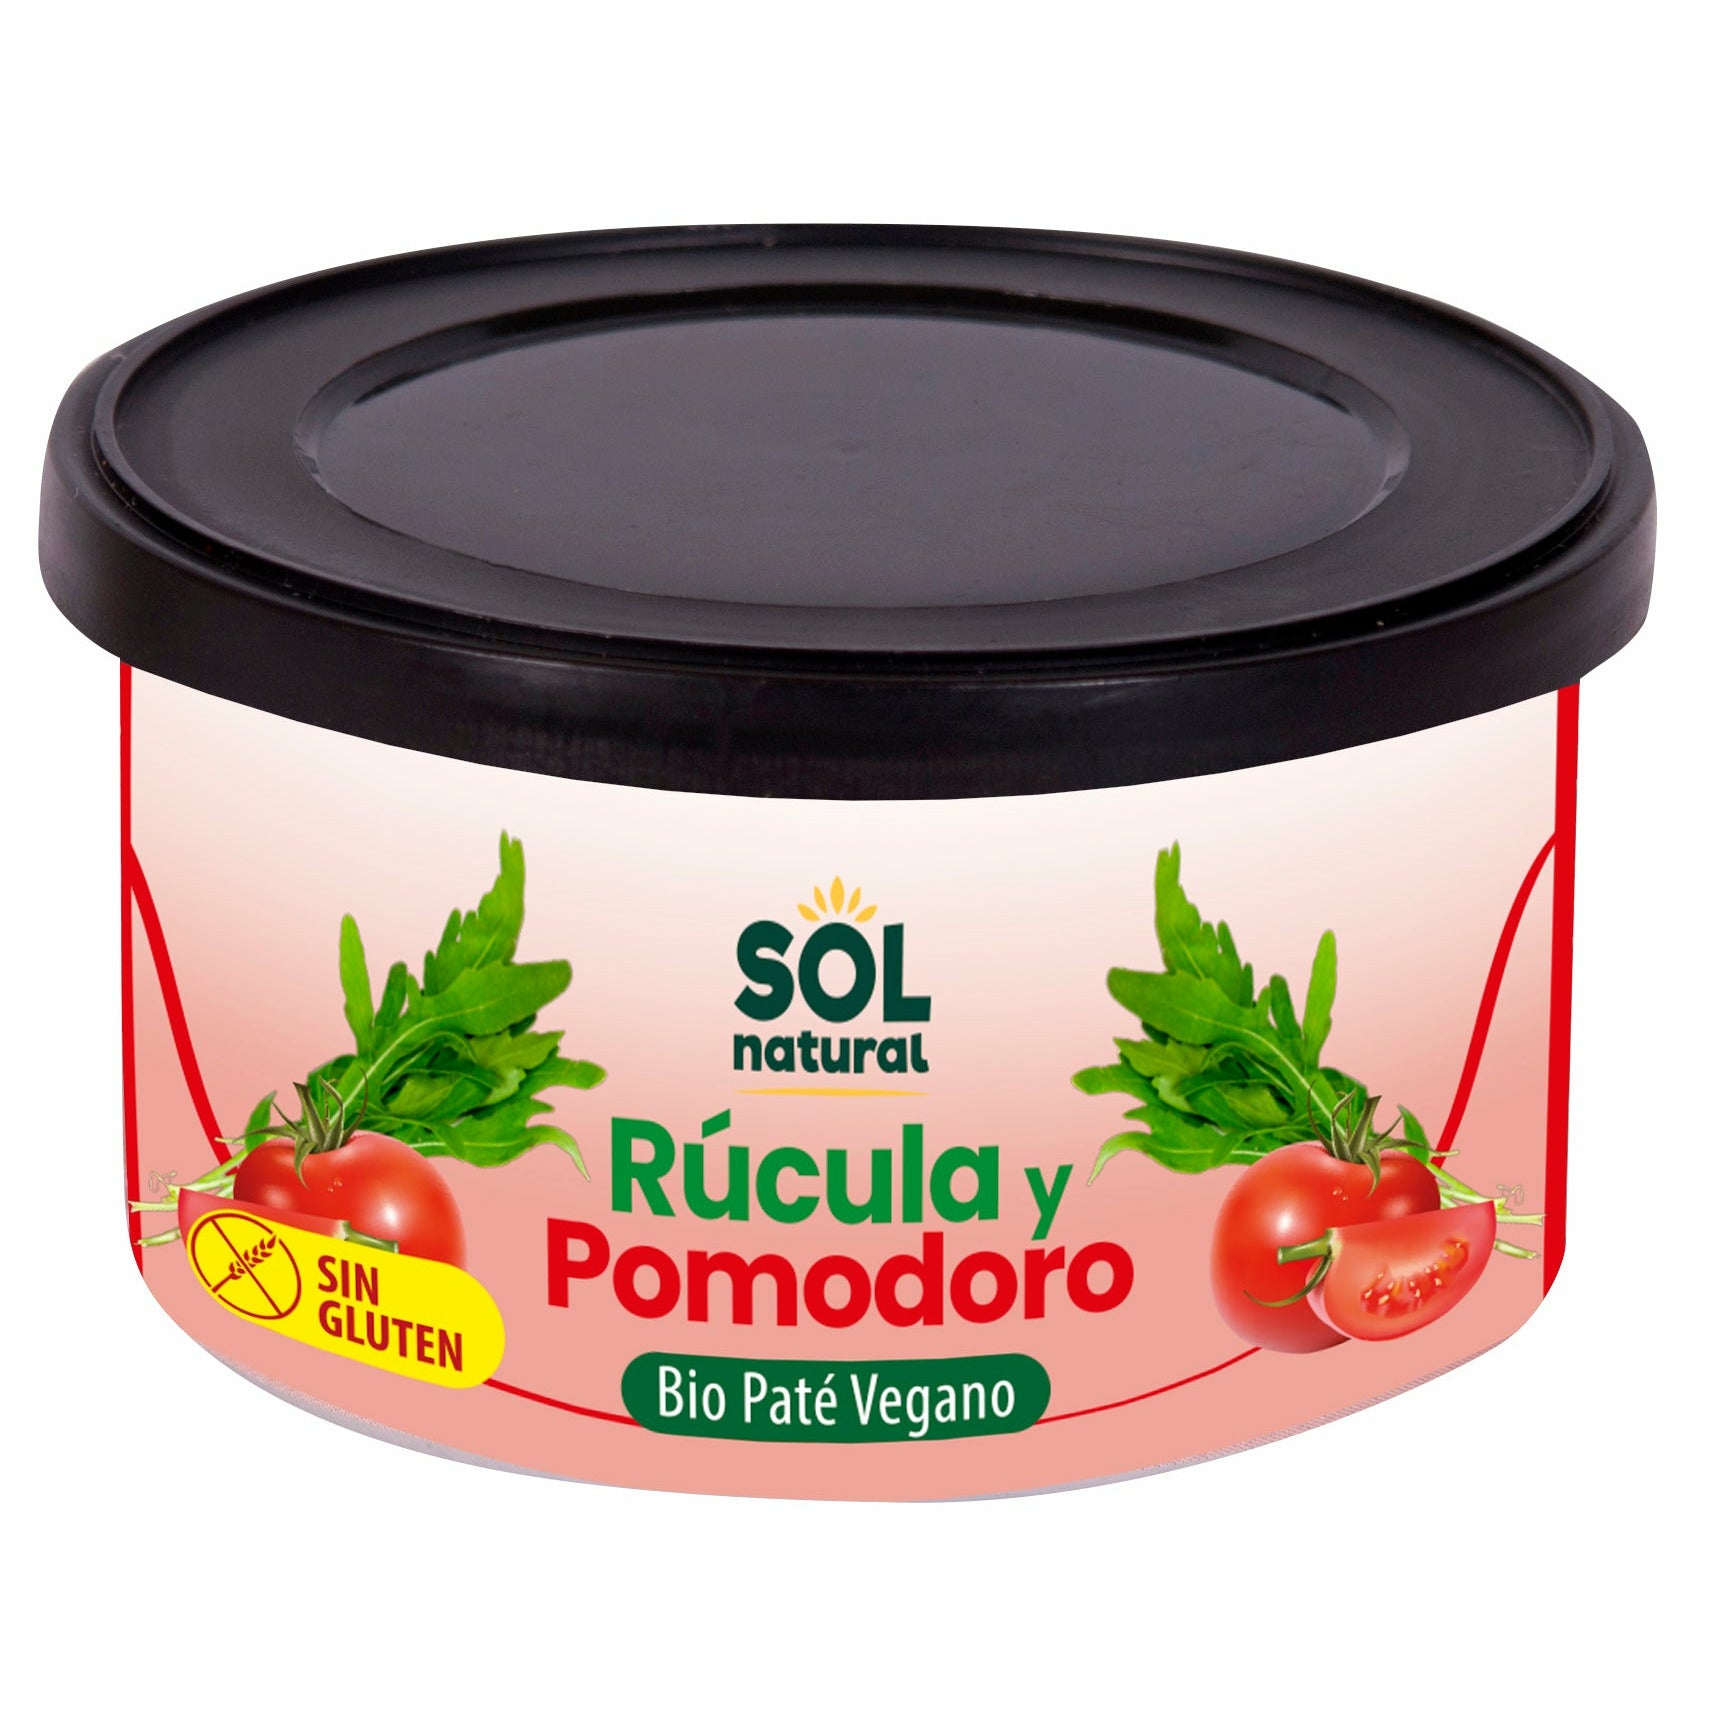 Pate Vegano de Rucula y Pomodoro Bio 125 gr | Sol Natural - Dietetica Ferrer